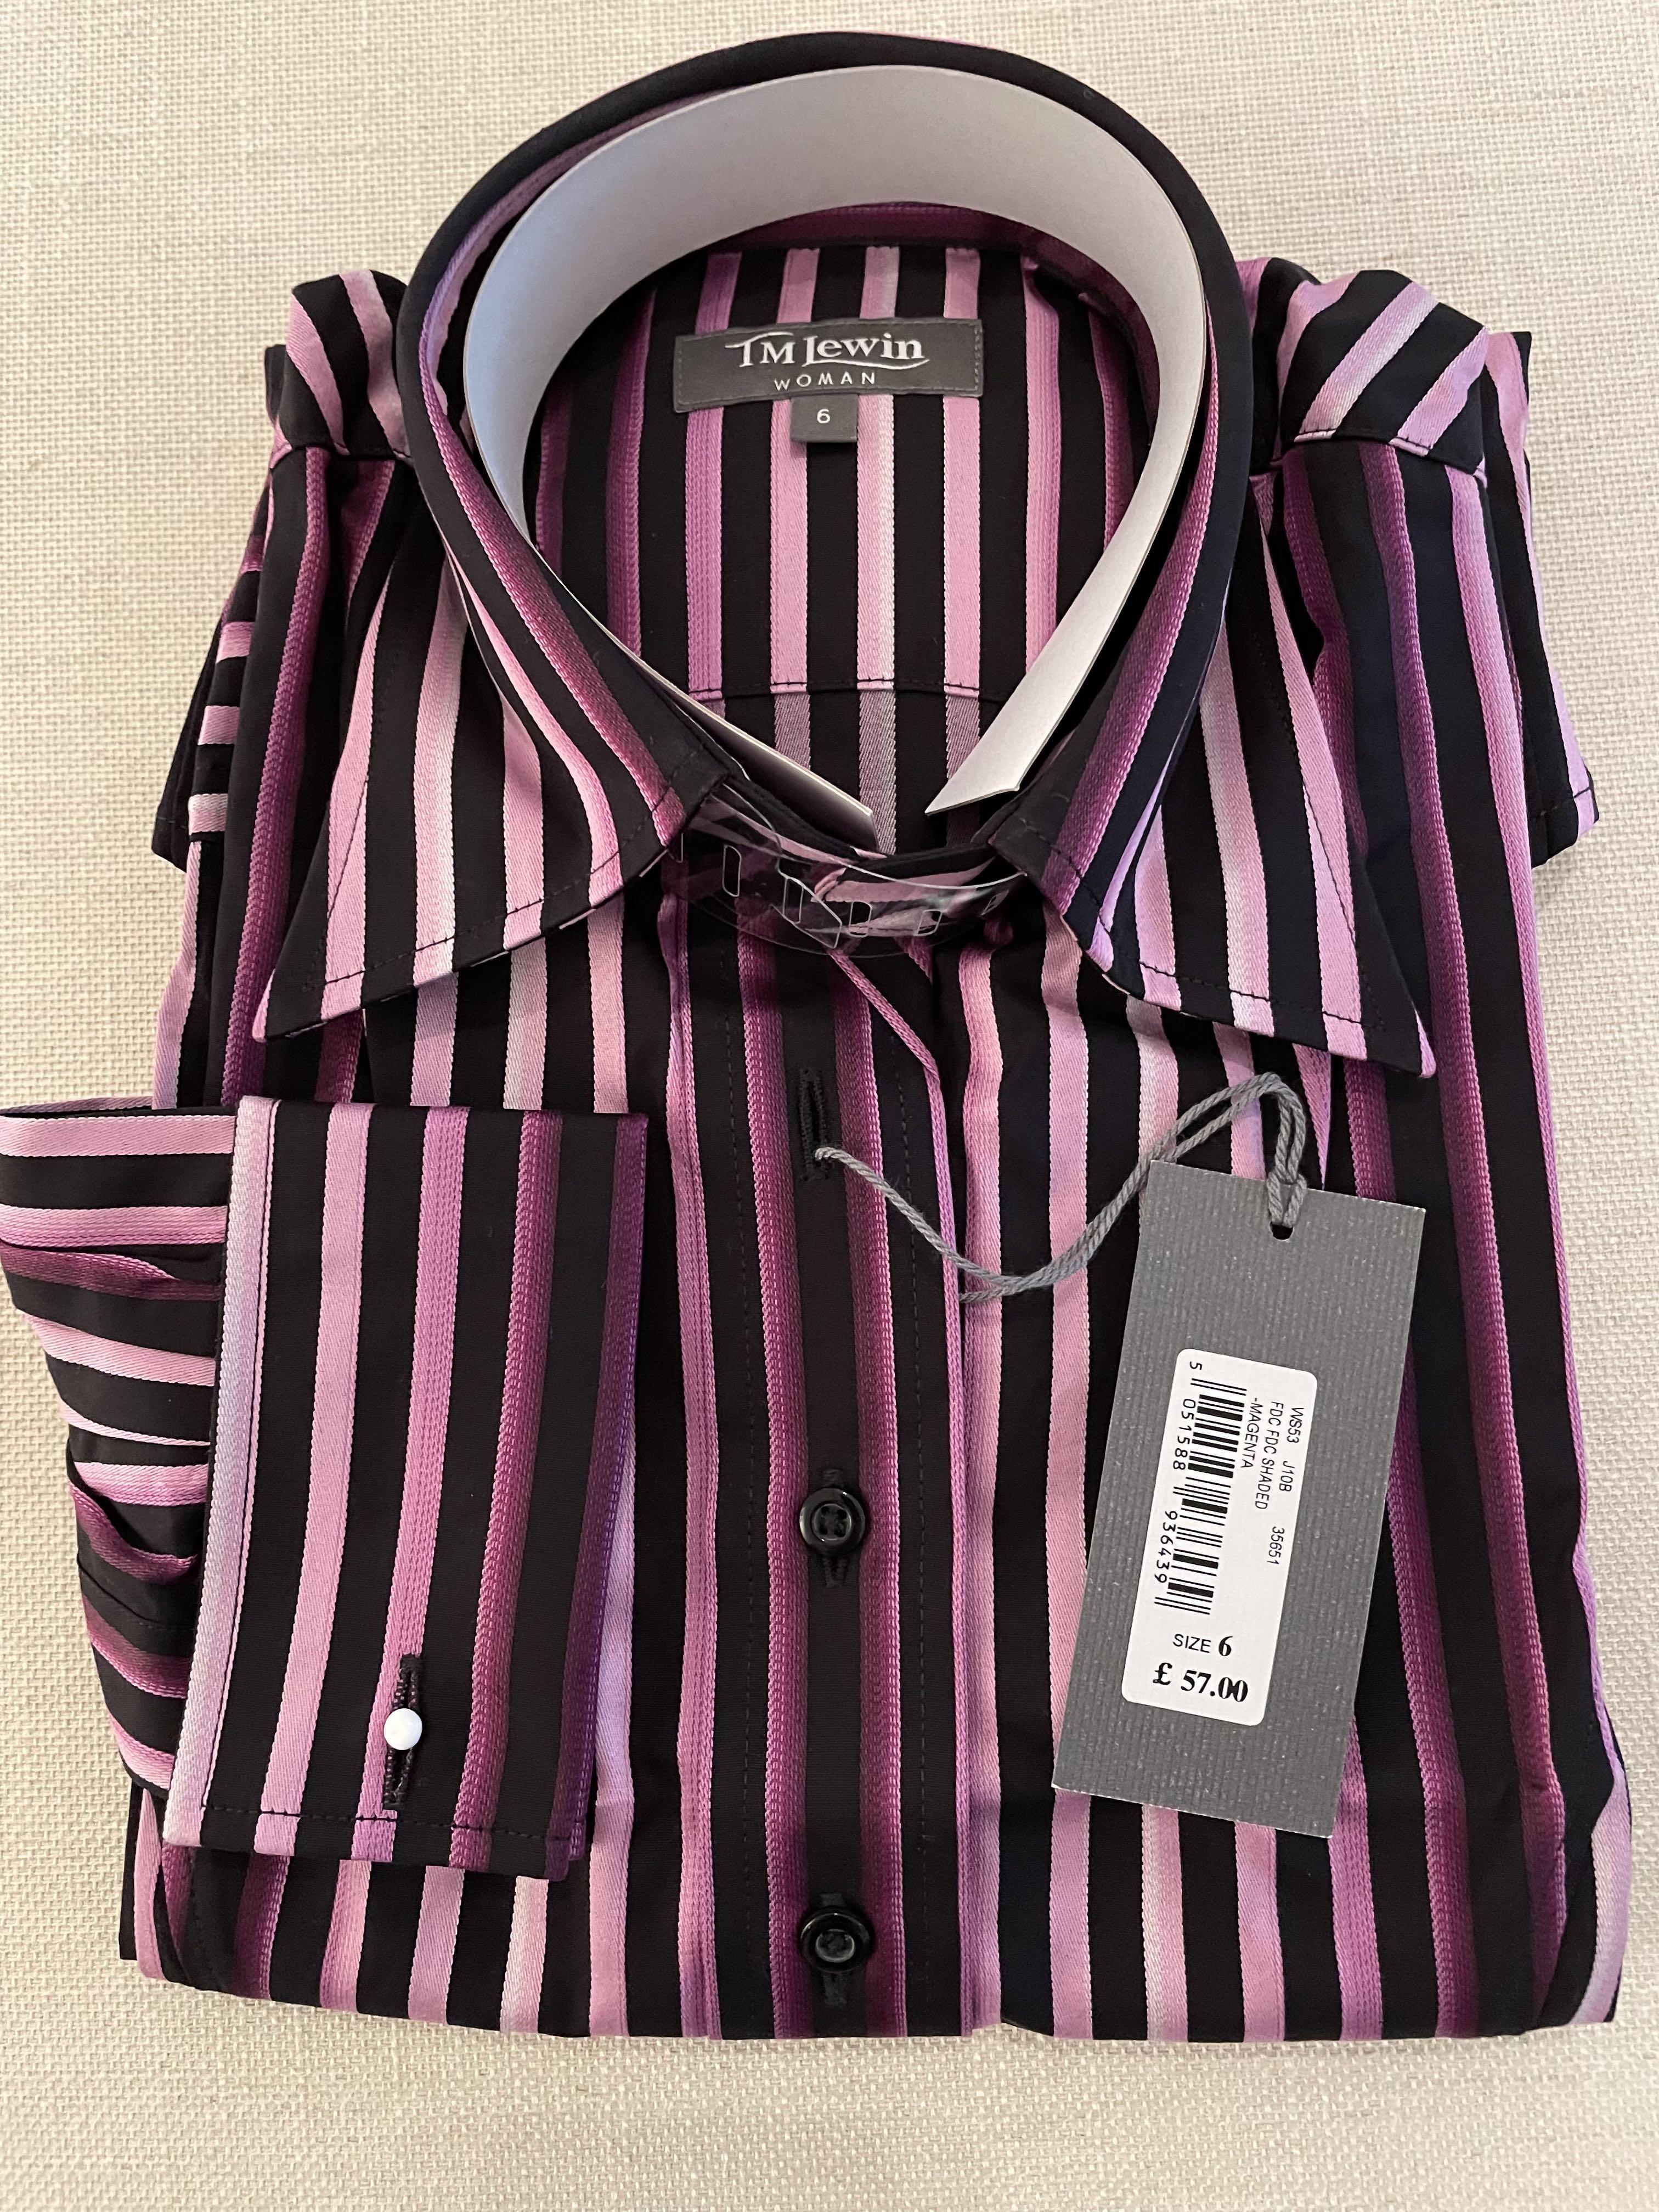 Ladies Classic Striped Shirt by T M Lewin. Dark Brown & 